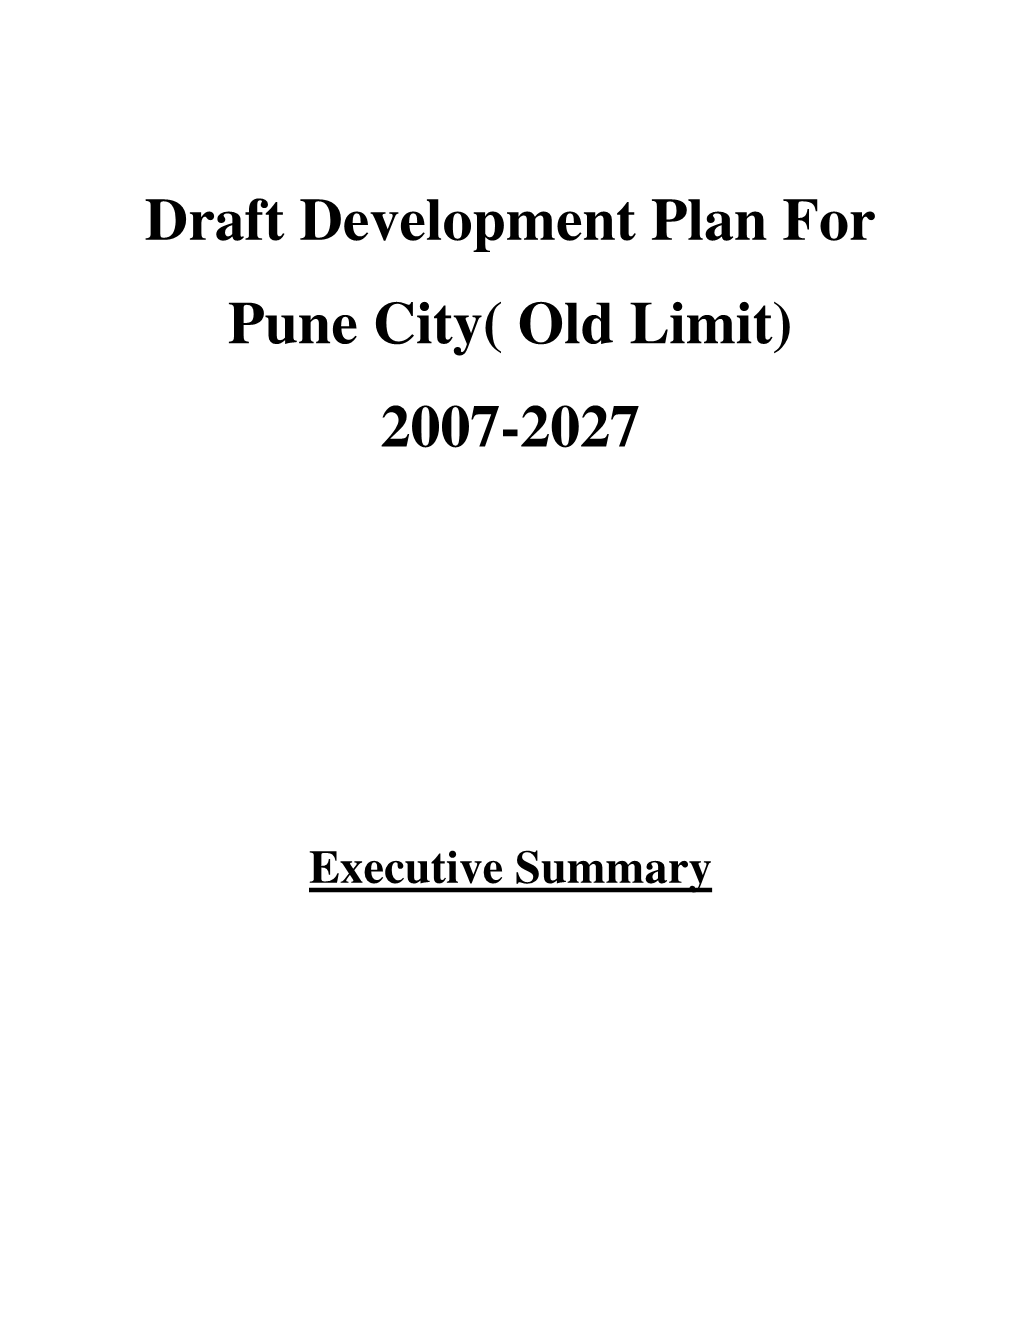 Draft Development Plan for Pune City( Old Limit) 2007-2027